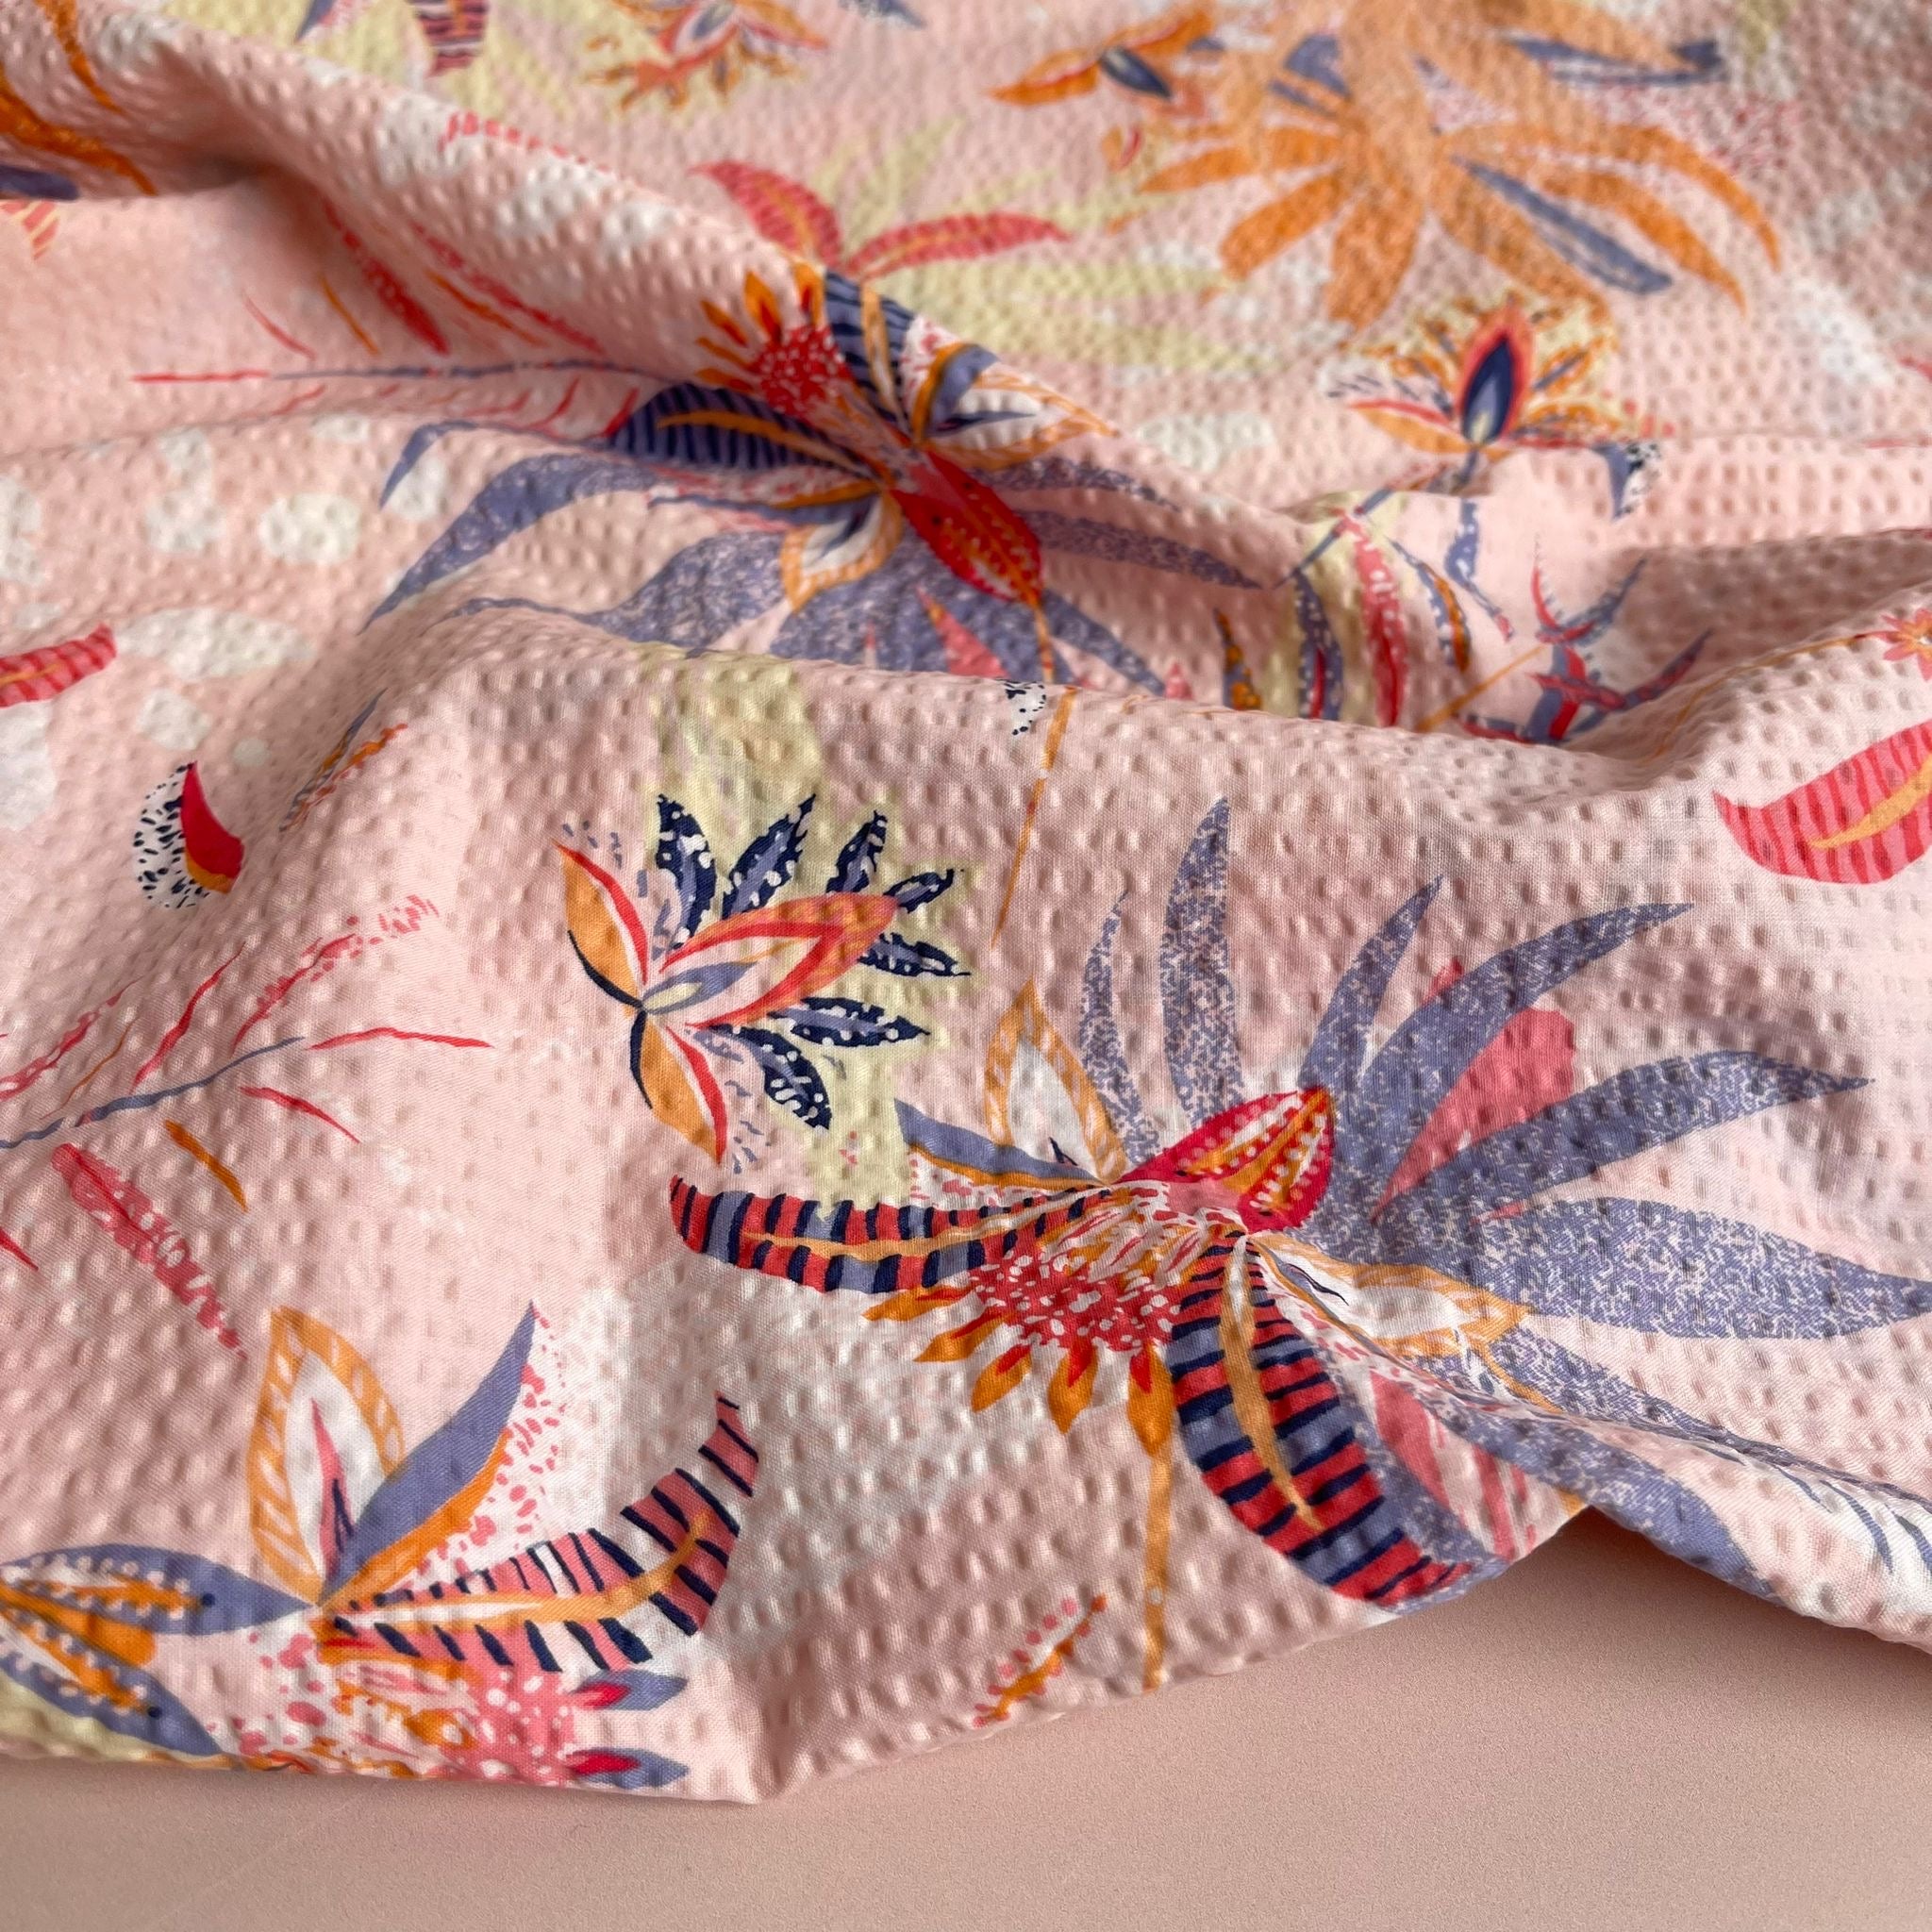 Ex-Designer Deadstock Tropical Blush Cotton Seersucker Fabric